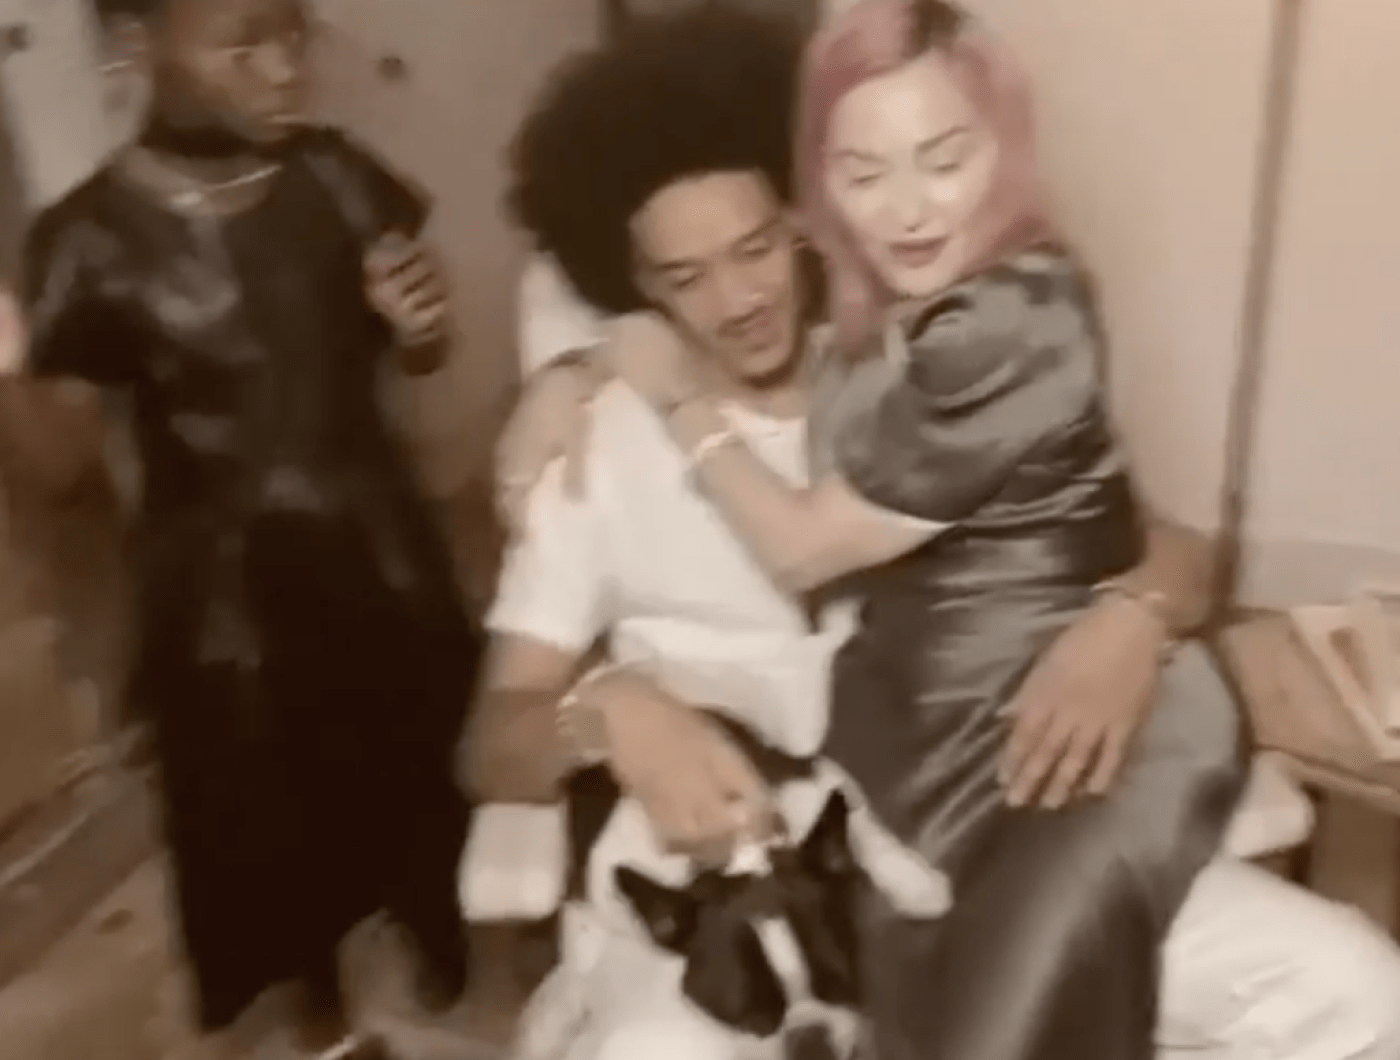 Madonna sitting on boyfriend Ahlamalik Williams' lap 